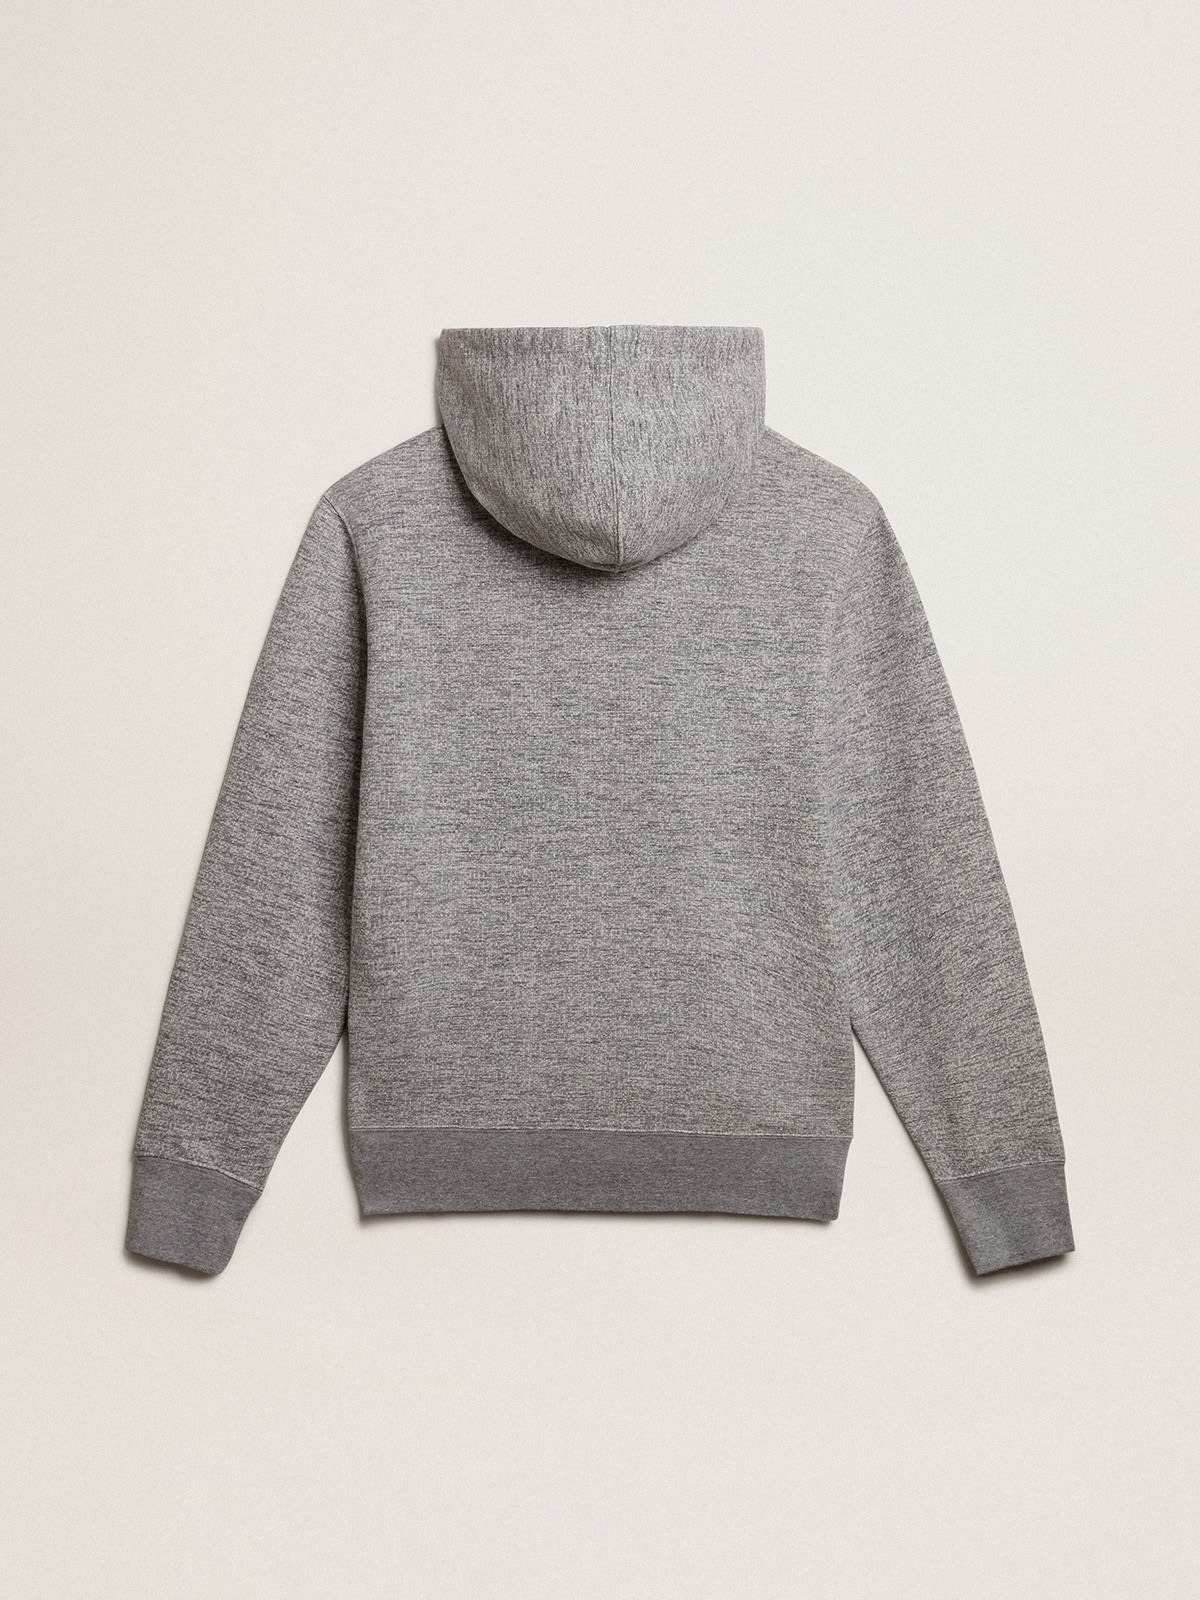 Golden Goose - Gray hooded sweatshirt with front pocket in 